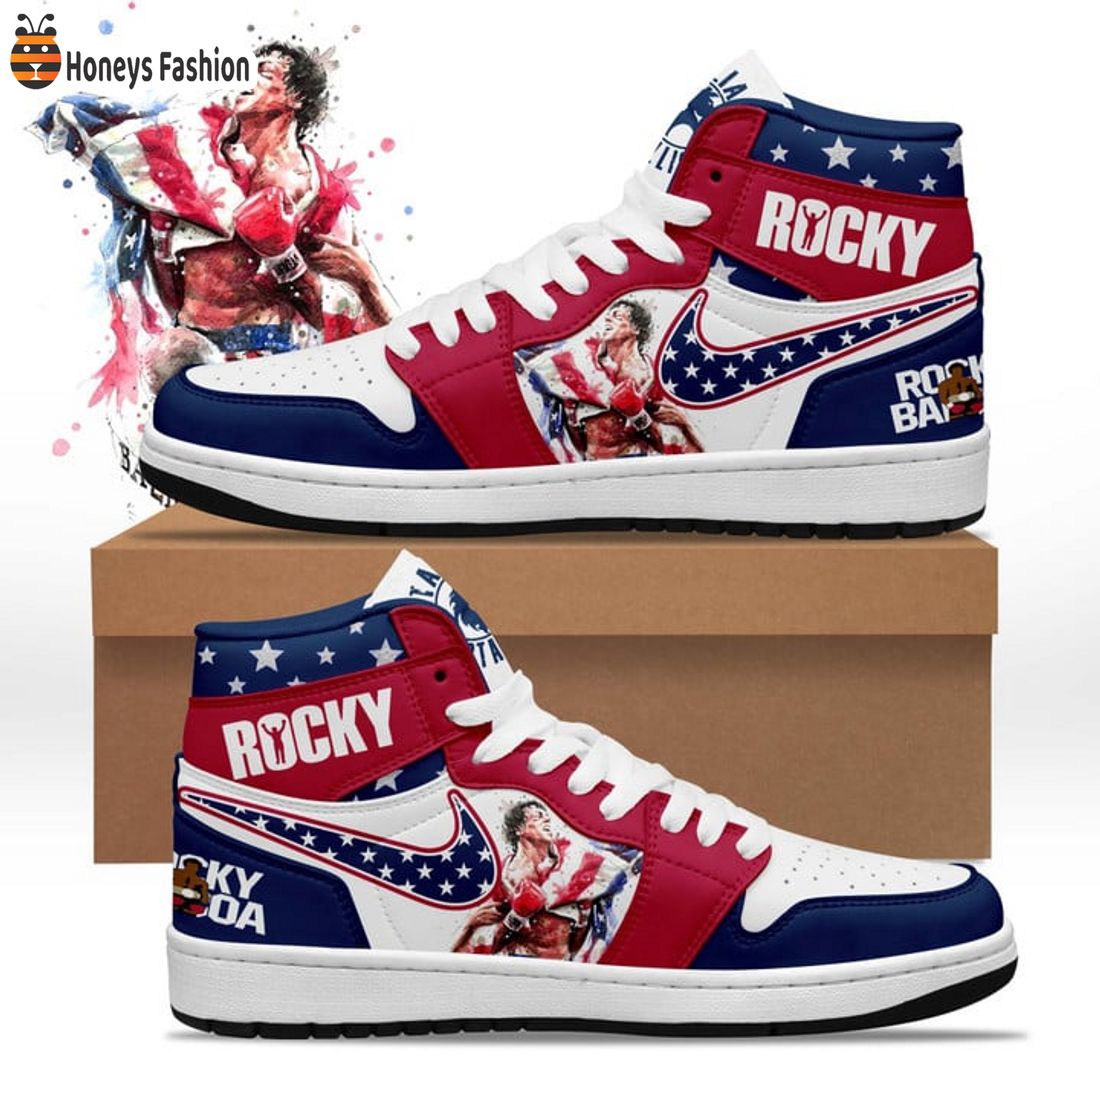 TRENDING Rocky Balboa Ameircan Flag Nike Air Jordan 1 High Sneakers